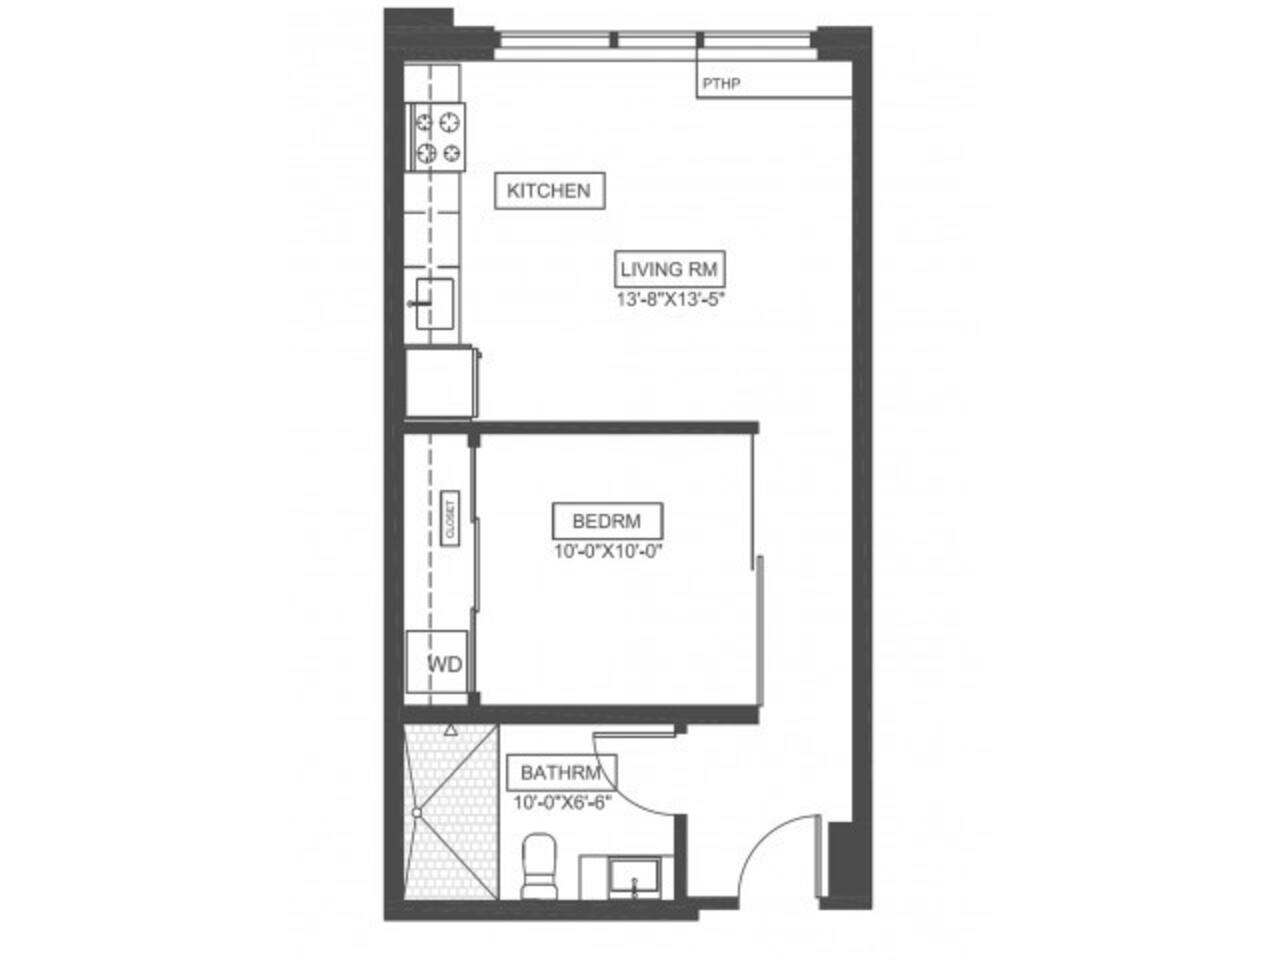 Floorplan diagram for A1G, showing 1 bedroom